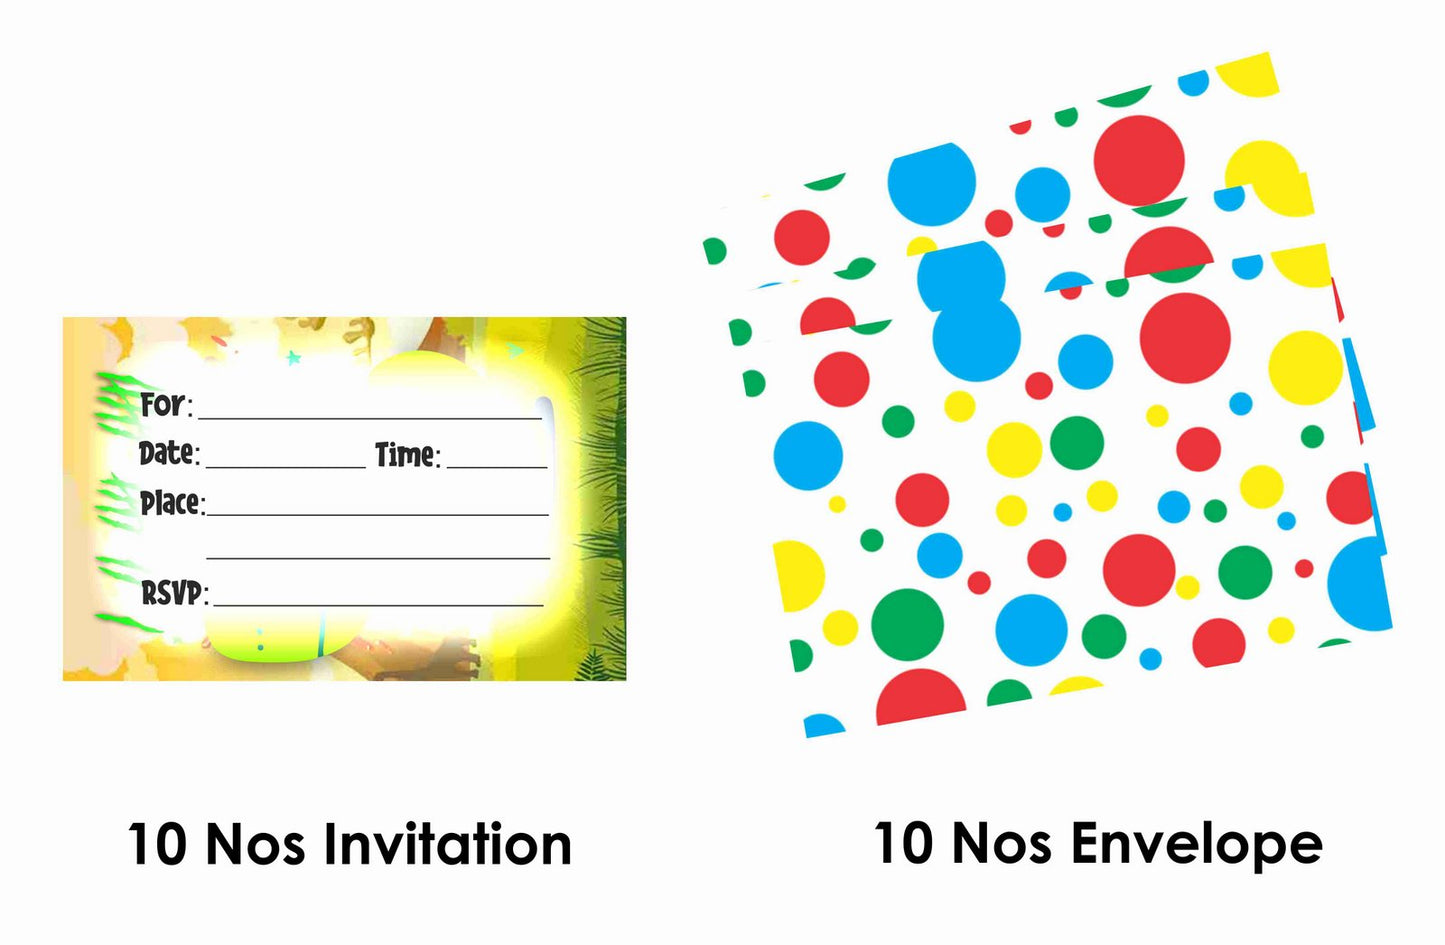 Dinosaur Theme Children's Birthday Party Invitations Cards with Envelopes - Kids Birthday Party Invitations for Boys or Girls,- Invitation Cards (Pack of 10)